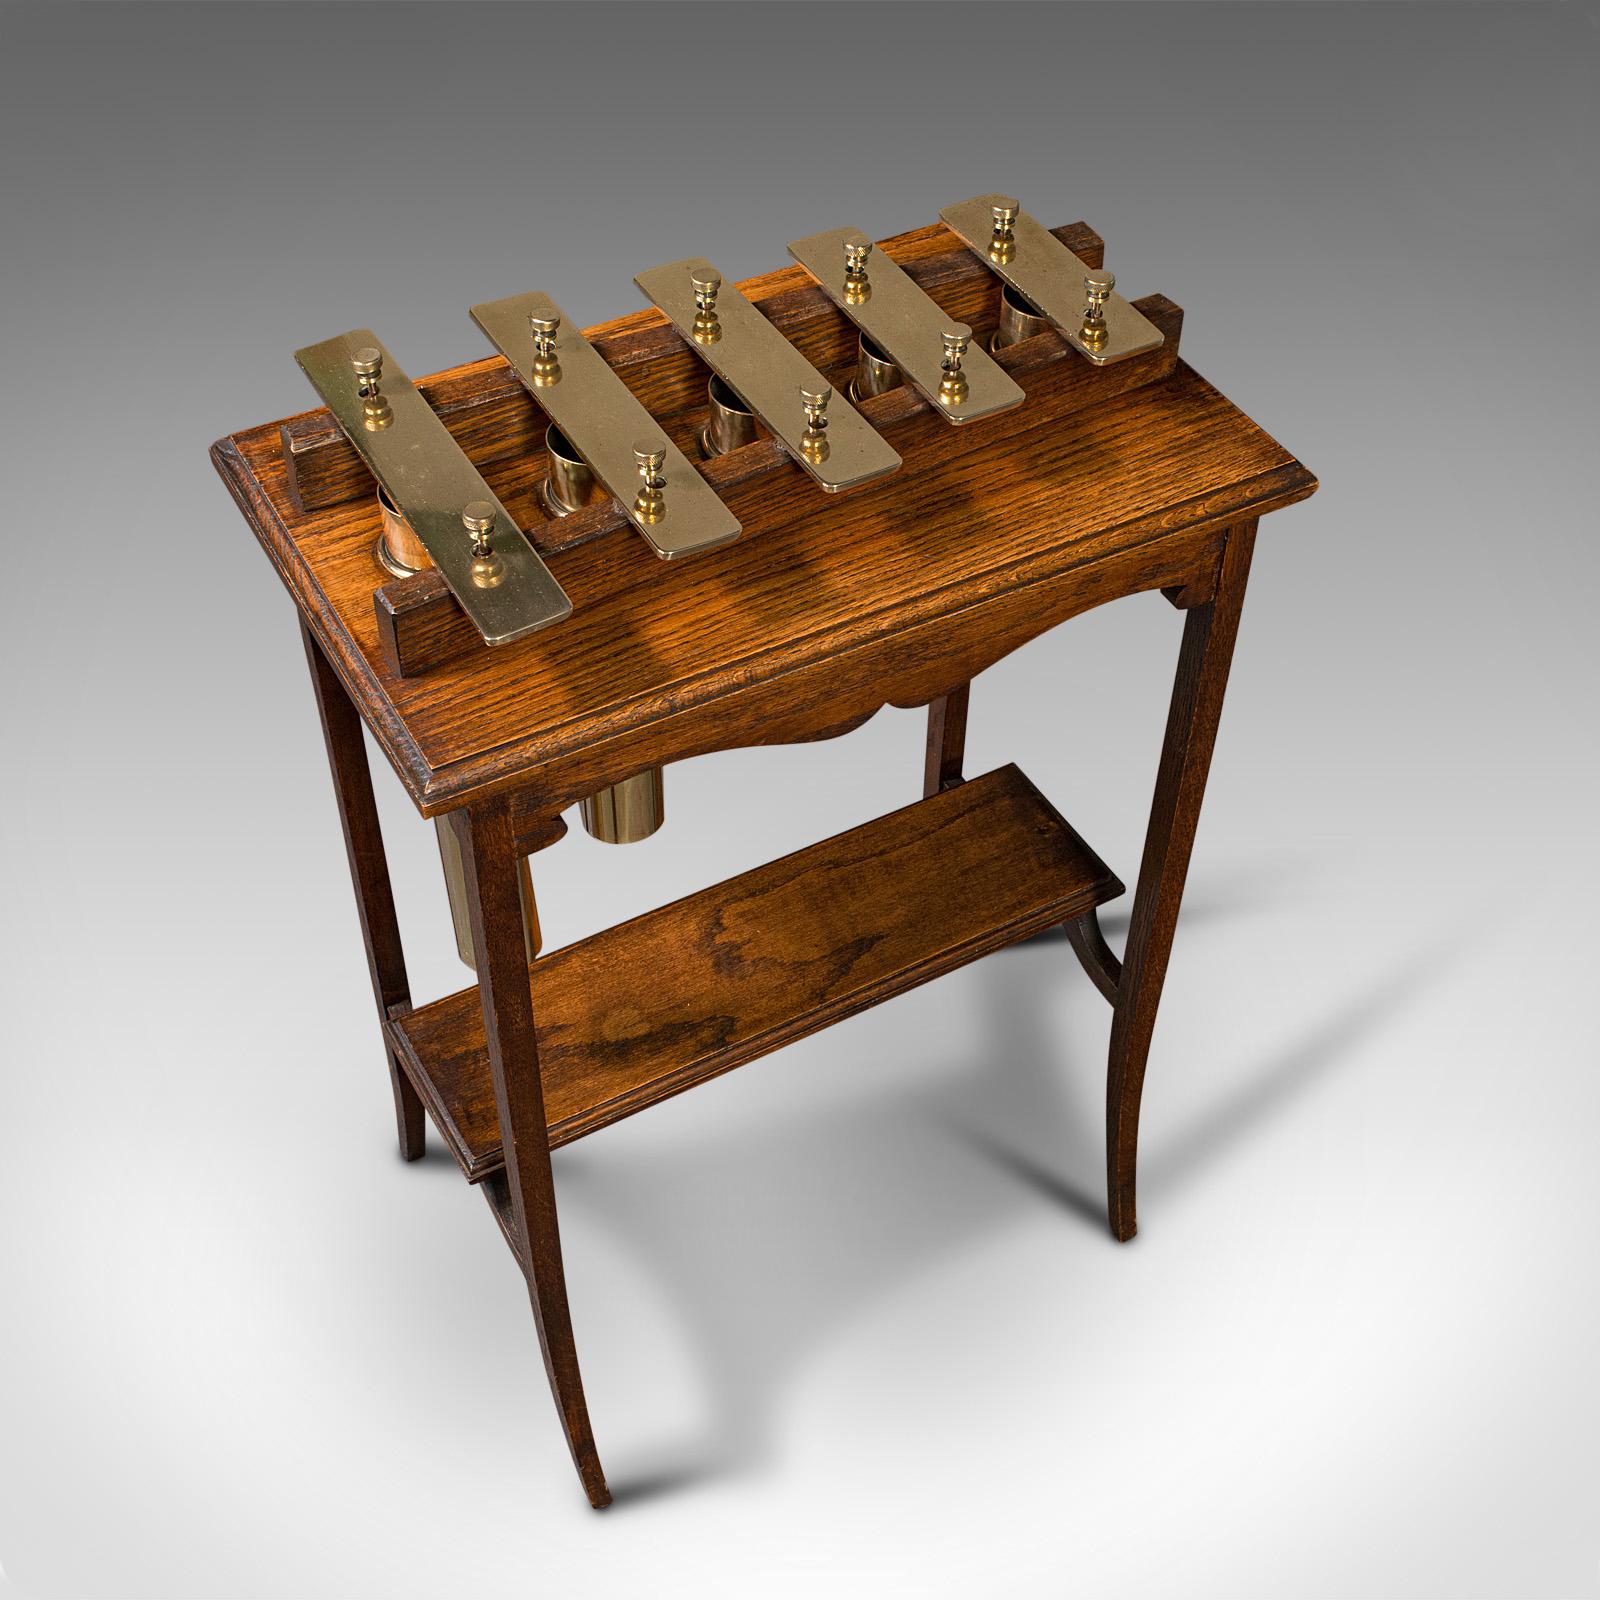 20th Century Antique Marimbaphone, Brass, Oak, Glockenspiel, Musical Instrument, Edwardian